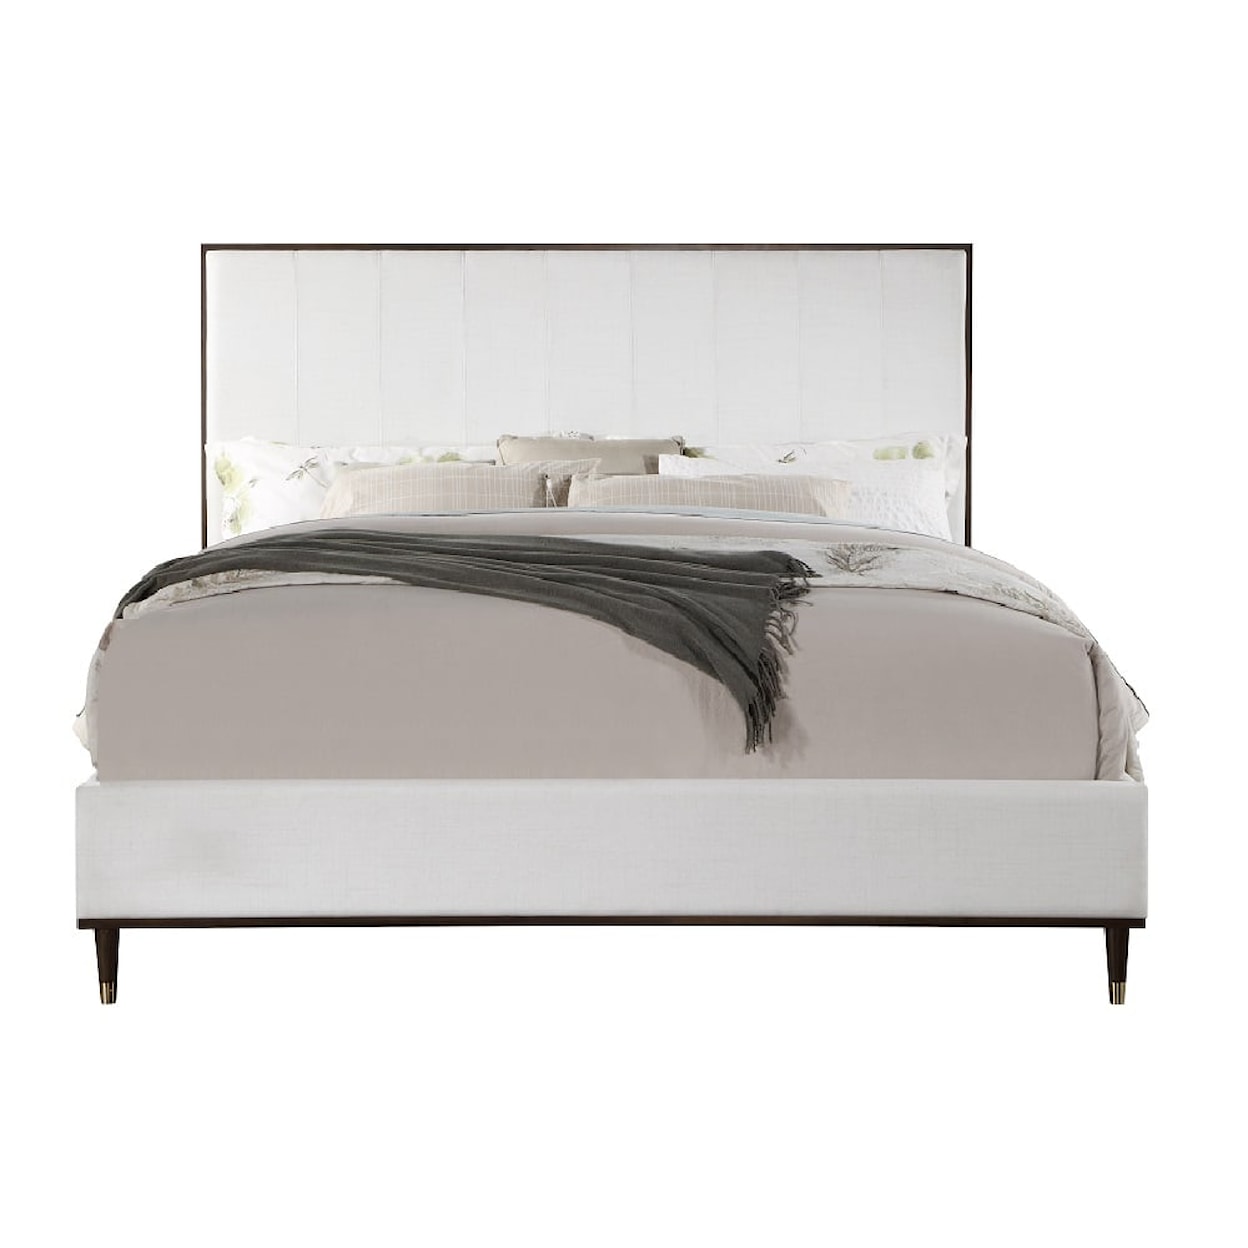 Acme Furniture Carena King Bed